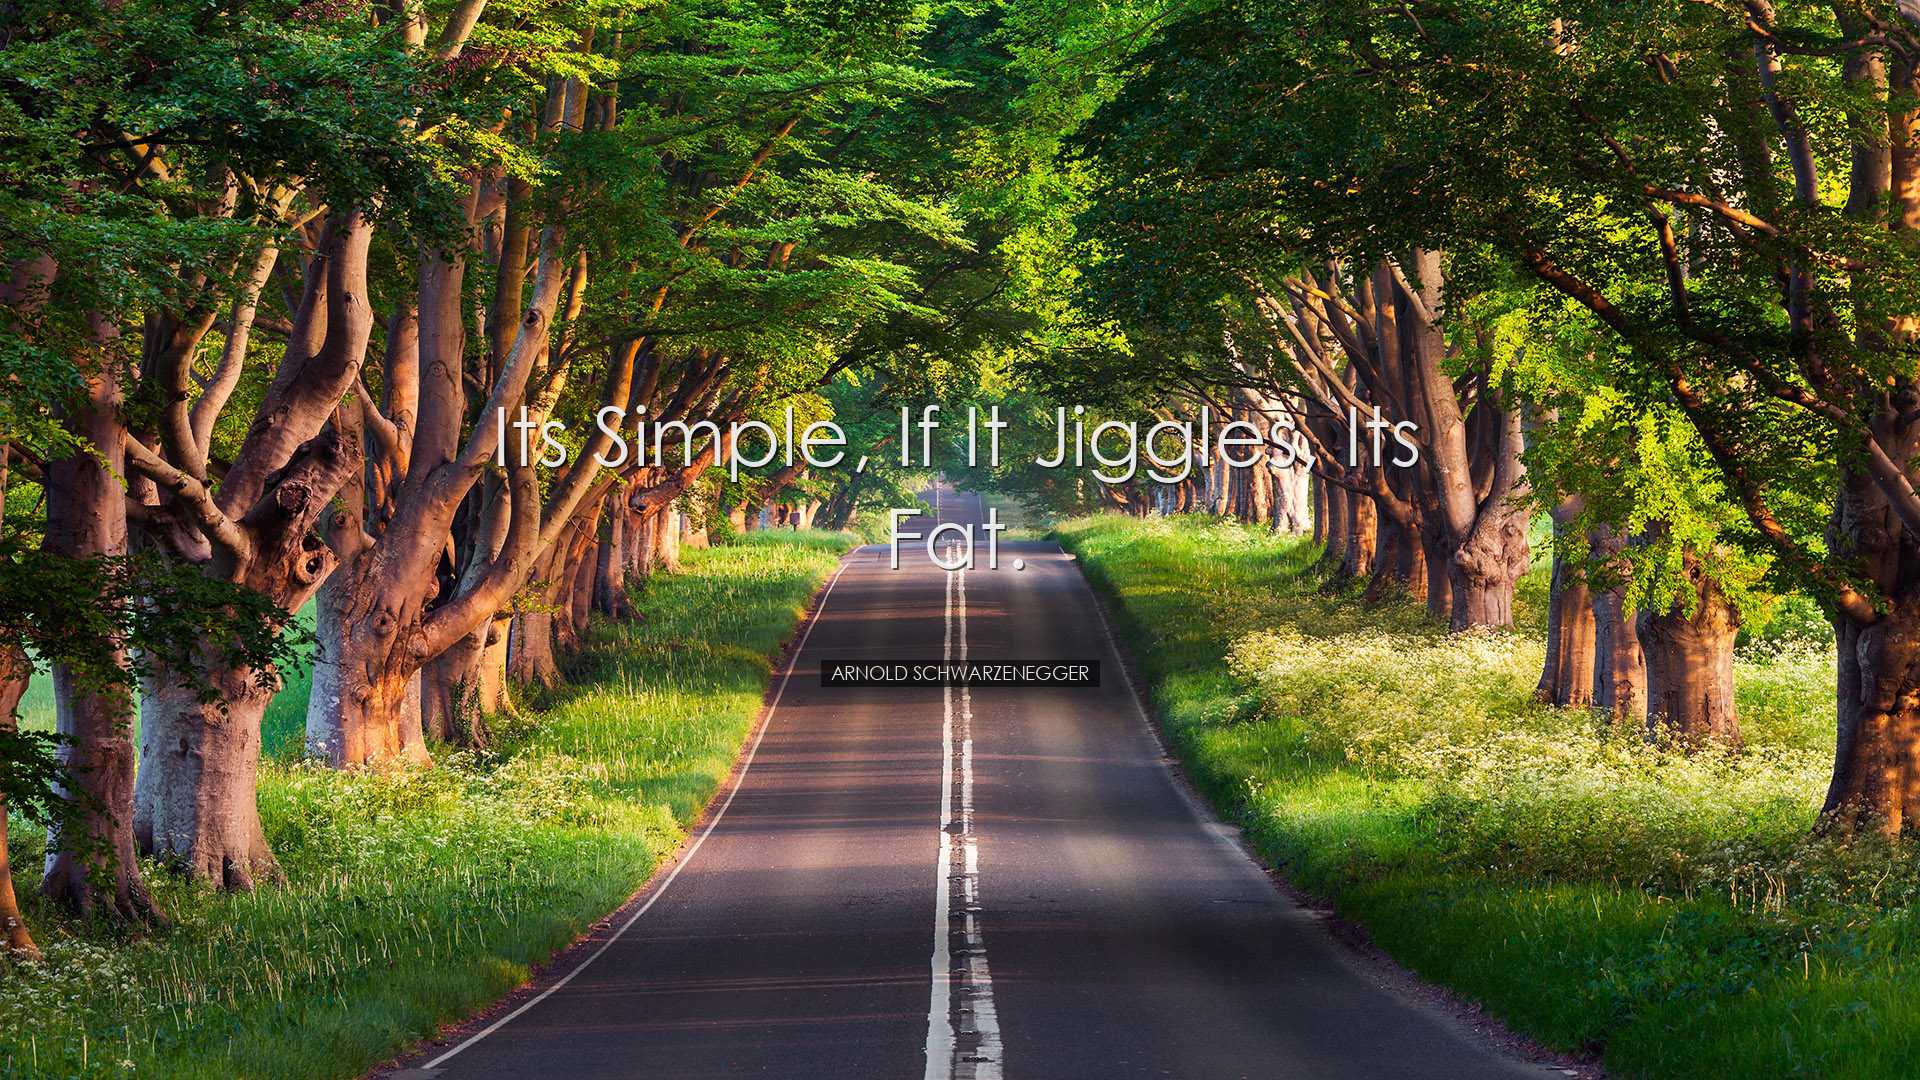 Its simple, if it jiggles, its fat. - Arnold Schwarzenegger